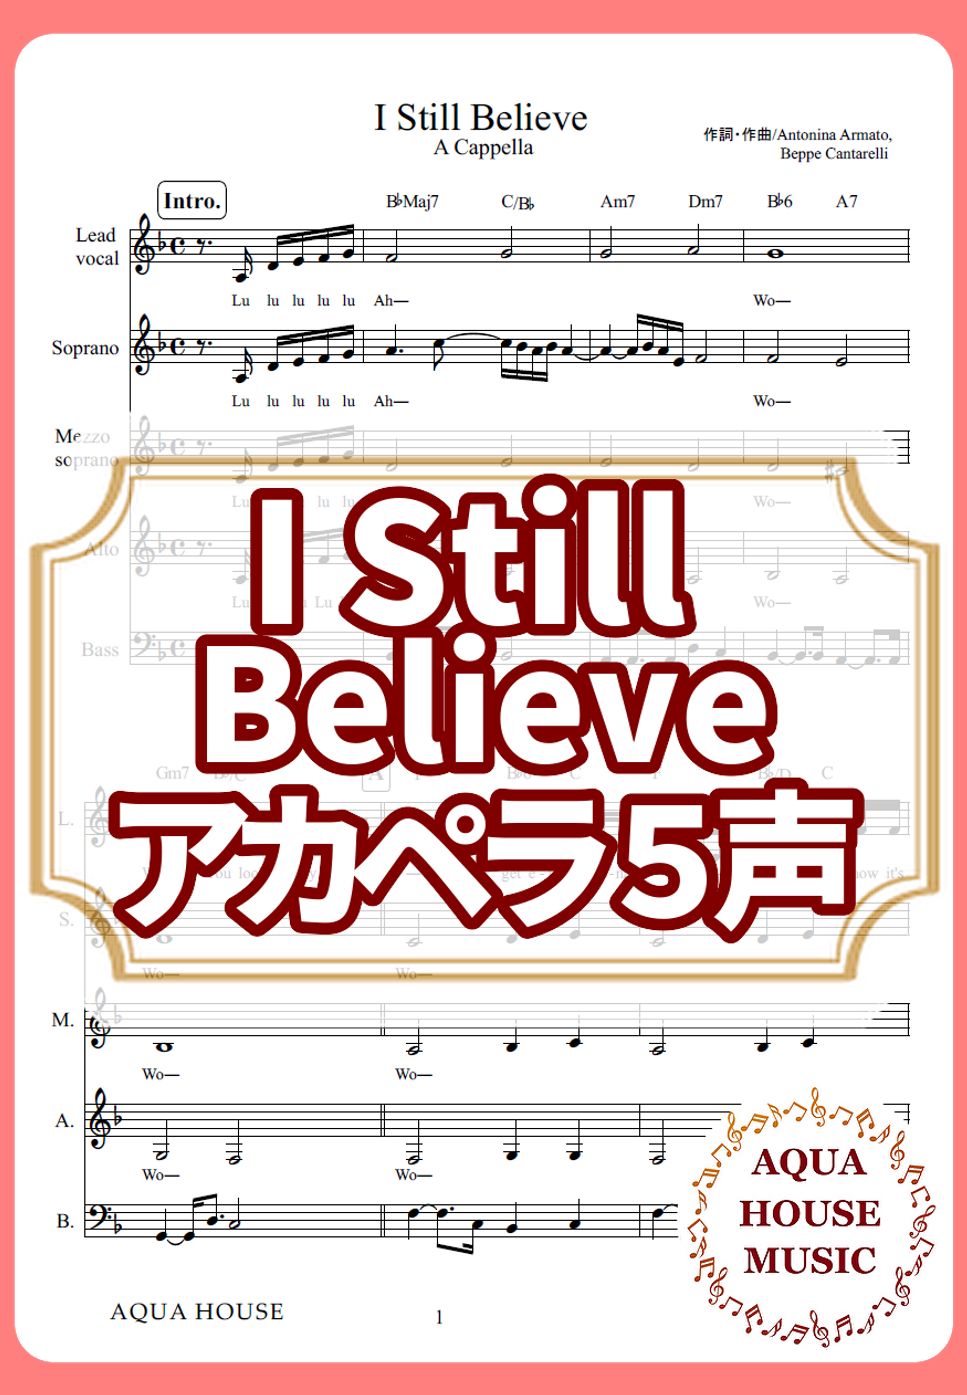 Mariah Carey - I Still Believe (アカペラ楽譜♪５声ボイパなし) by 飯田 亜紗子